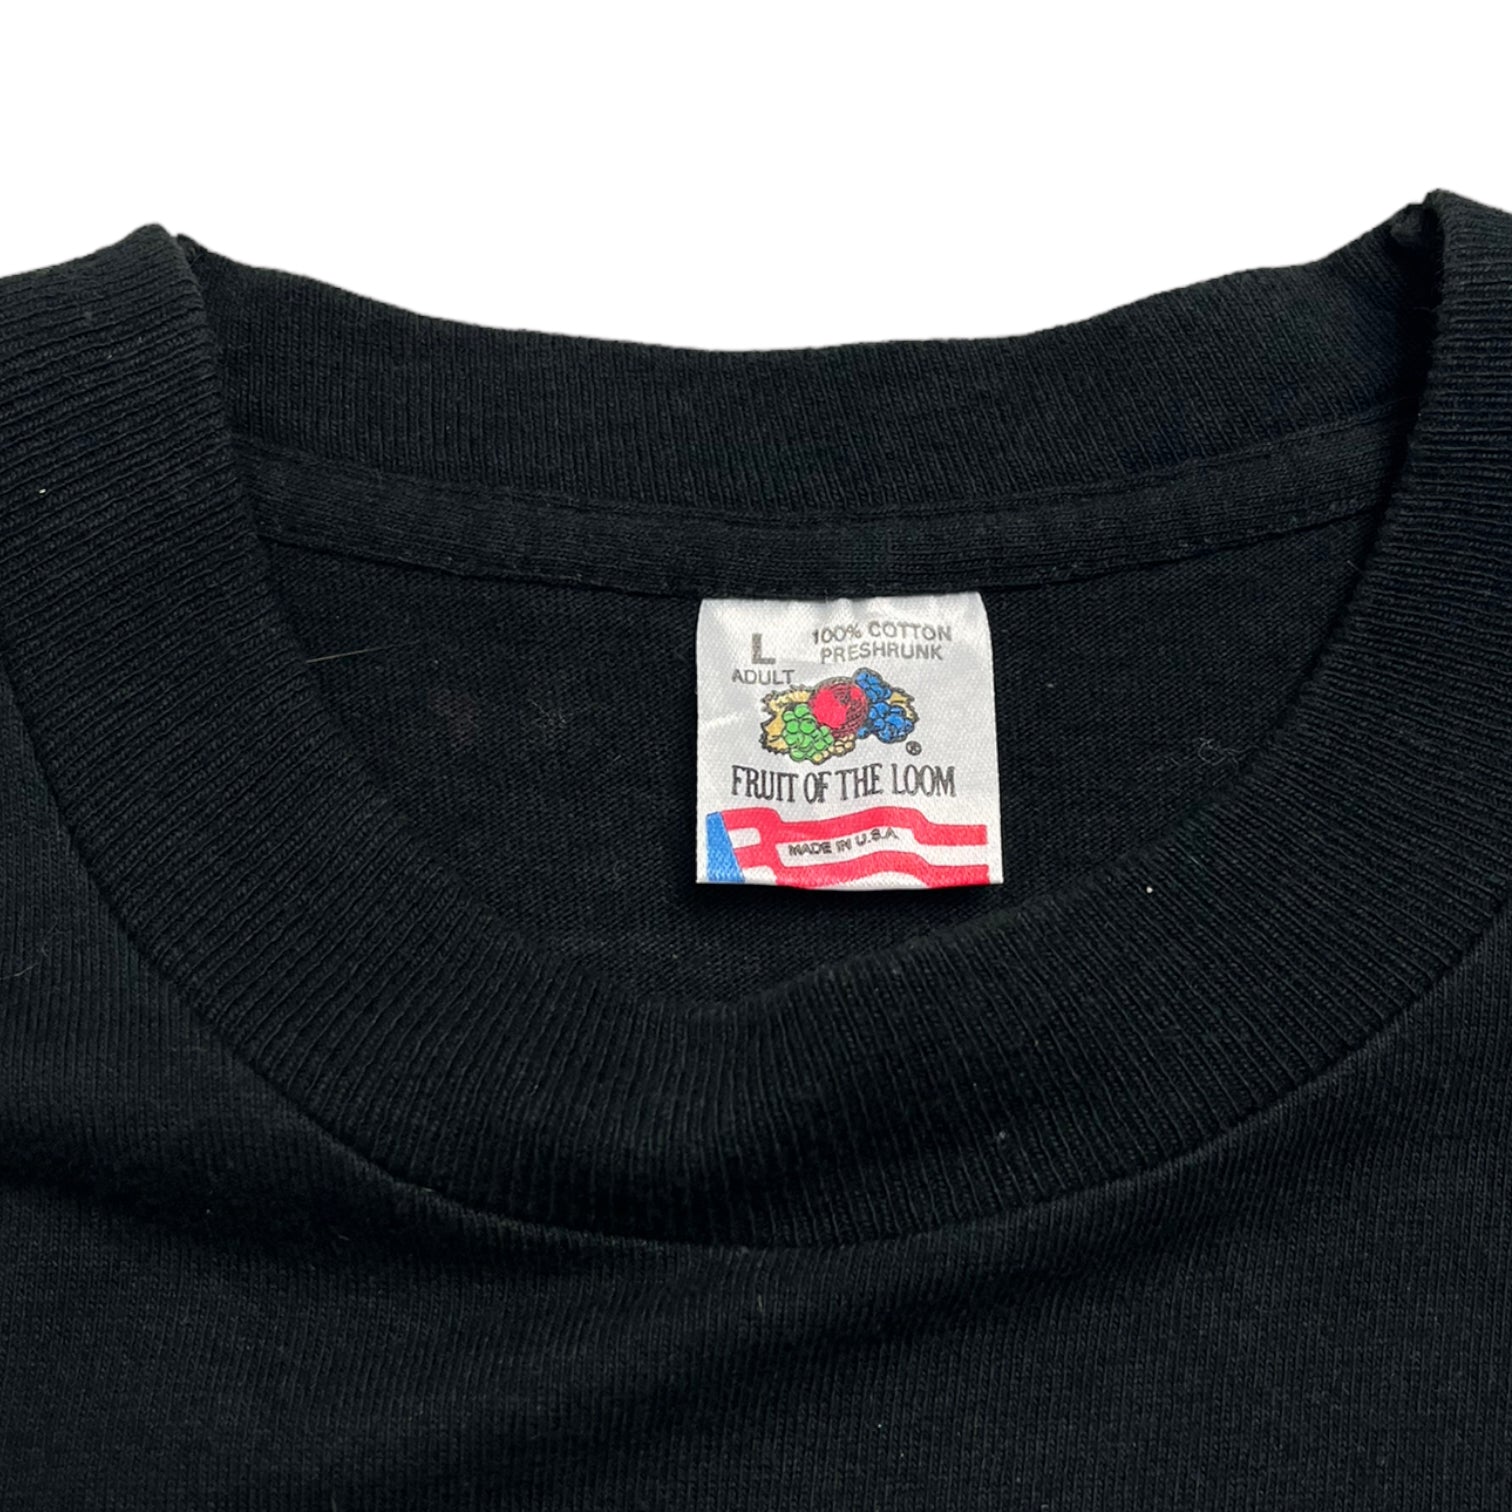 1990 Louis Armstrong Satchmo T-Shirt - Black